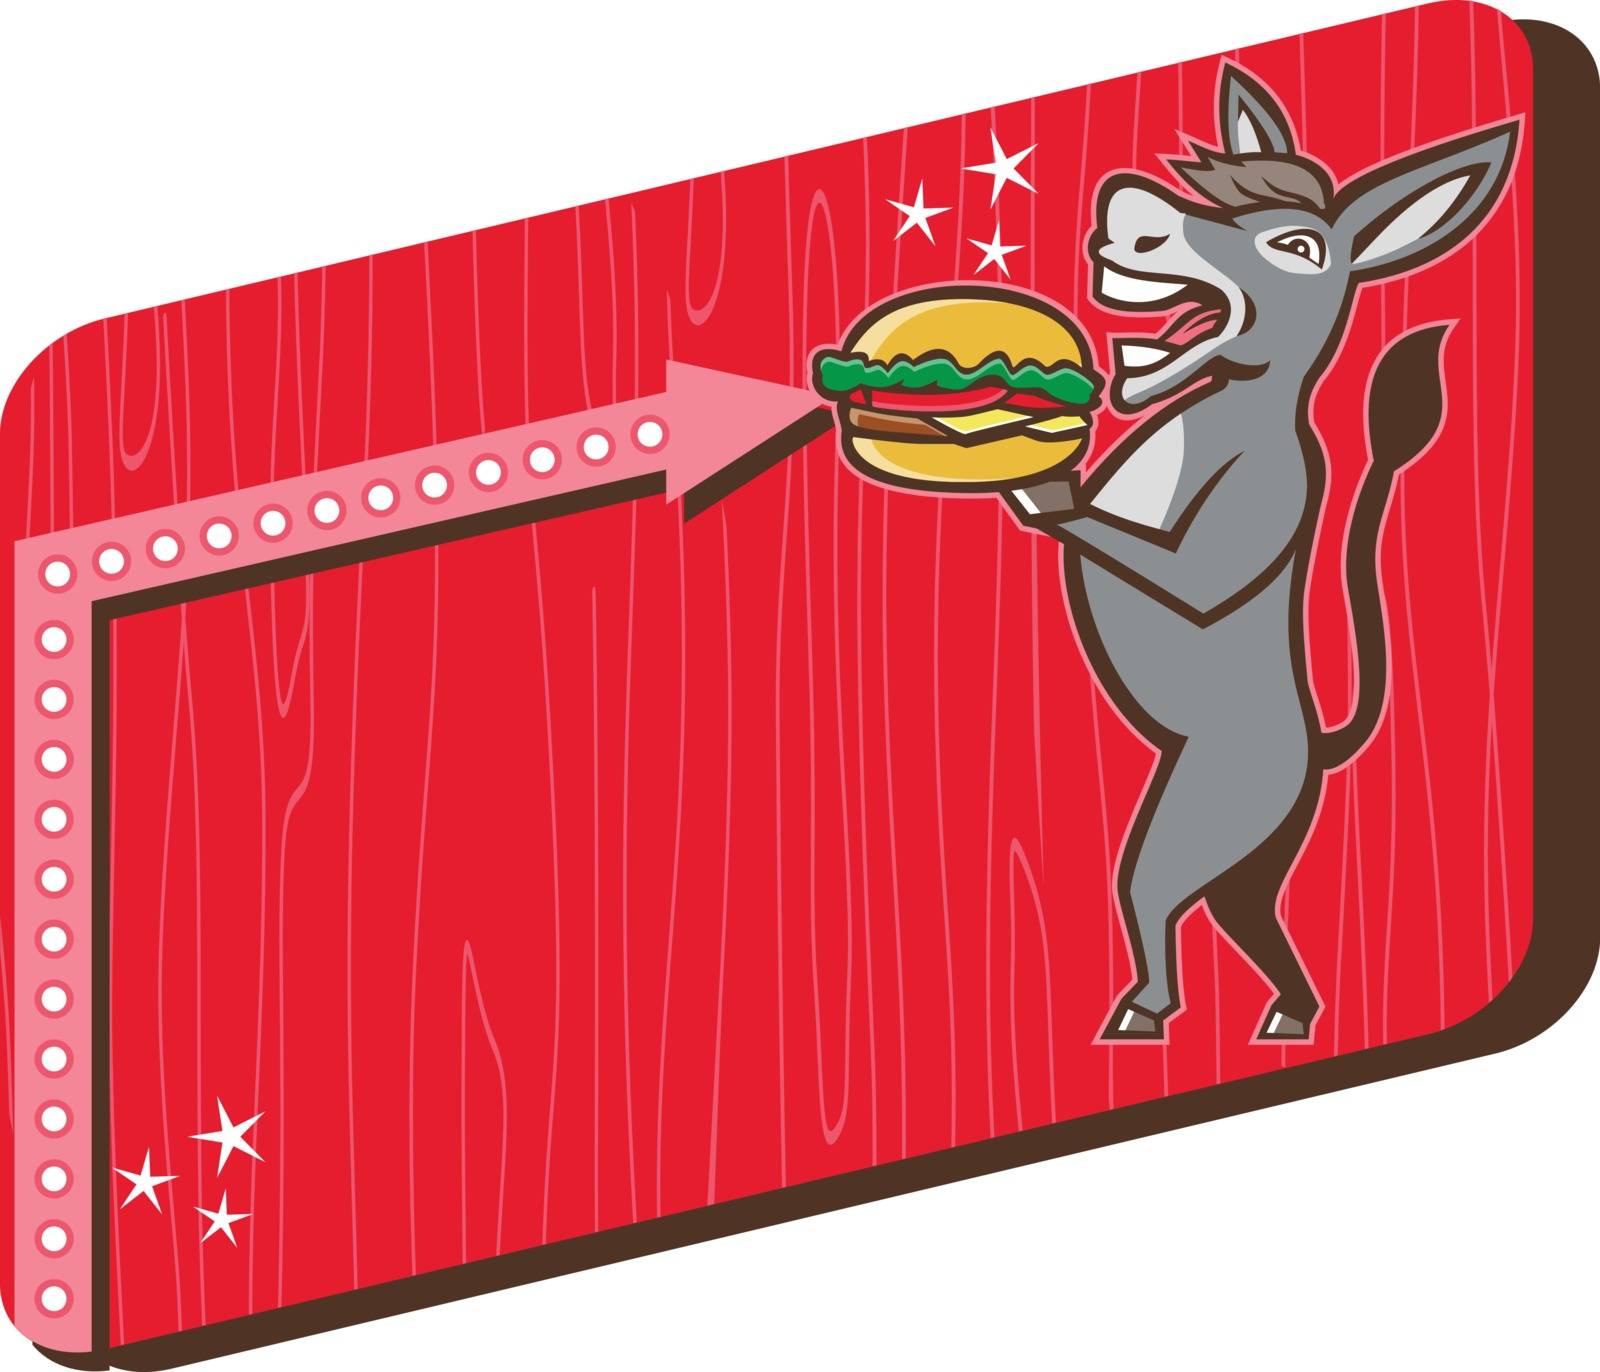 Donkey Mascot Serve Burger Rectangle Retro by patrimonio